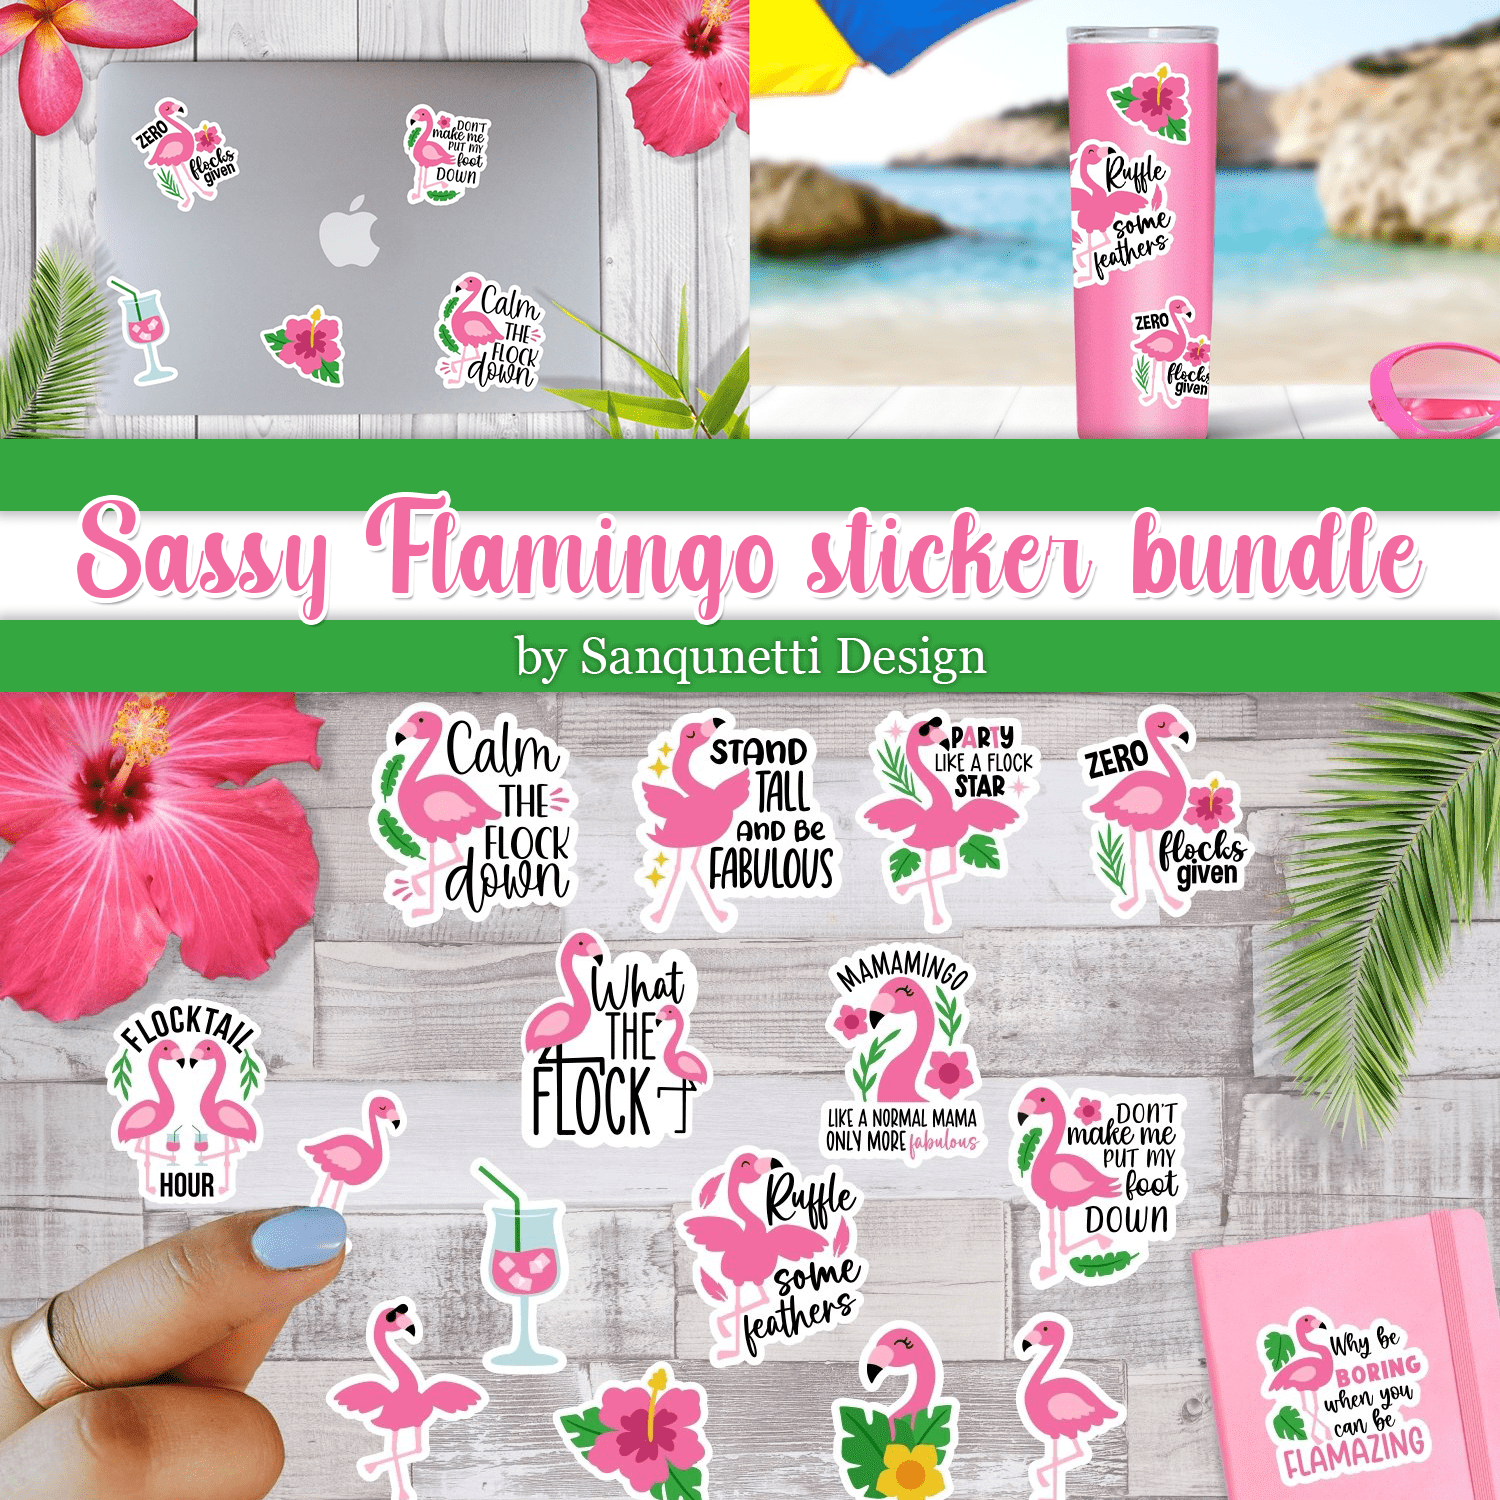 Sassy flamingo sticker bundle - main image preview.